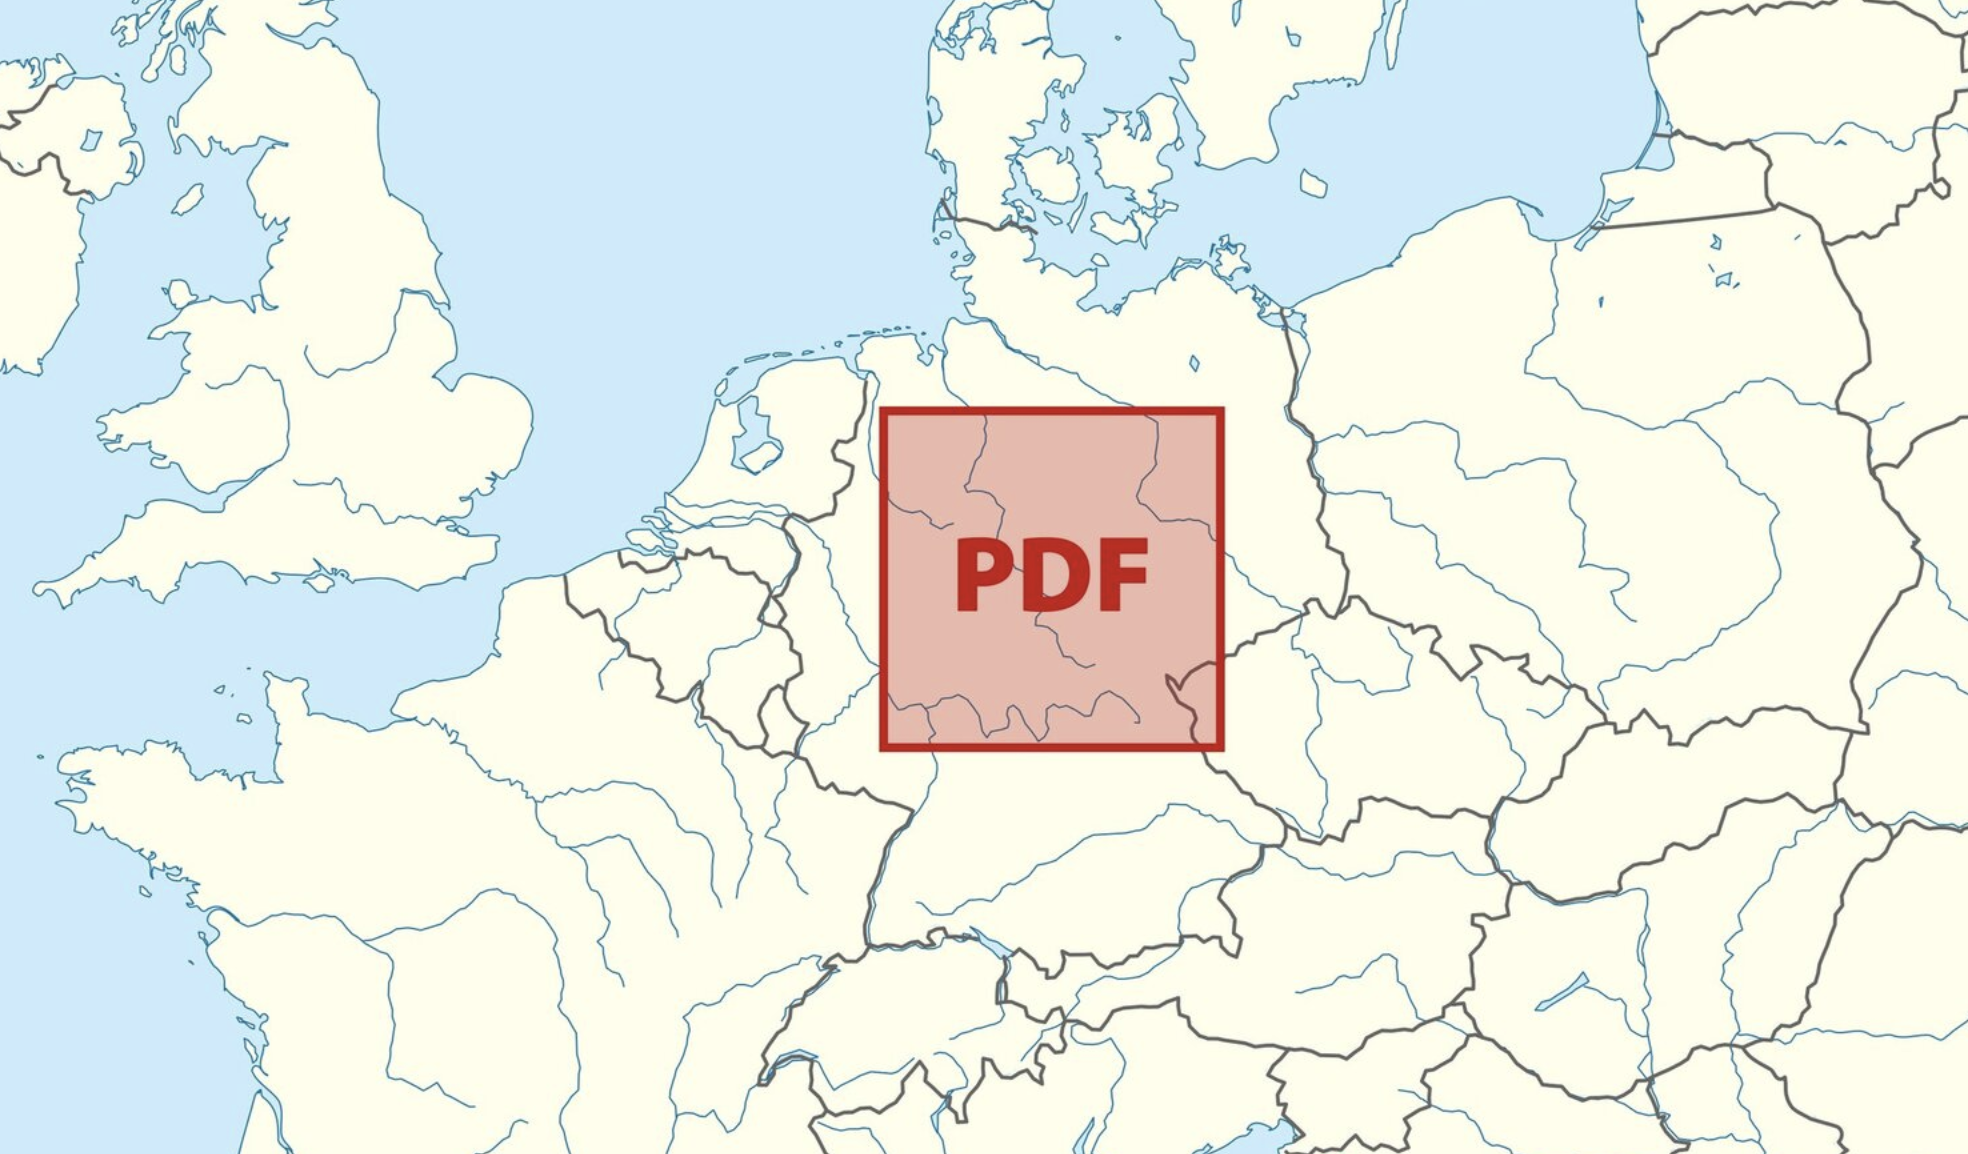 A PDF symbol covering half of Germany.